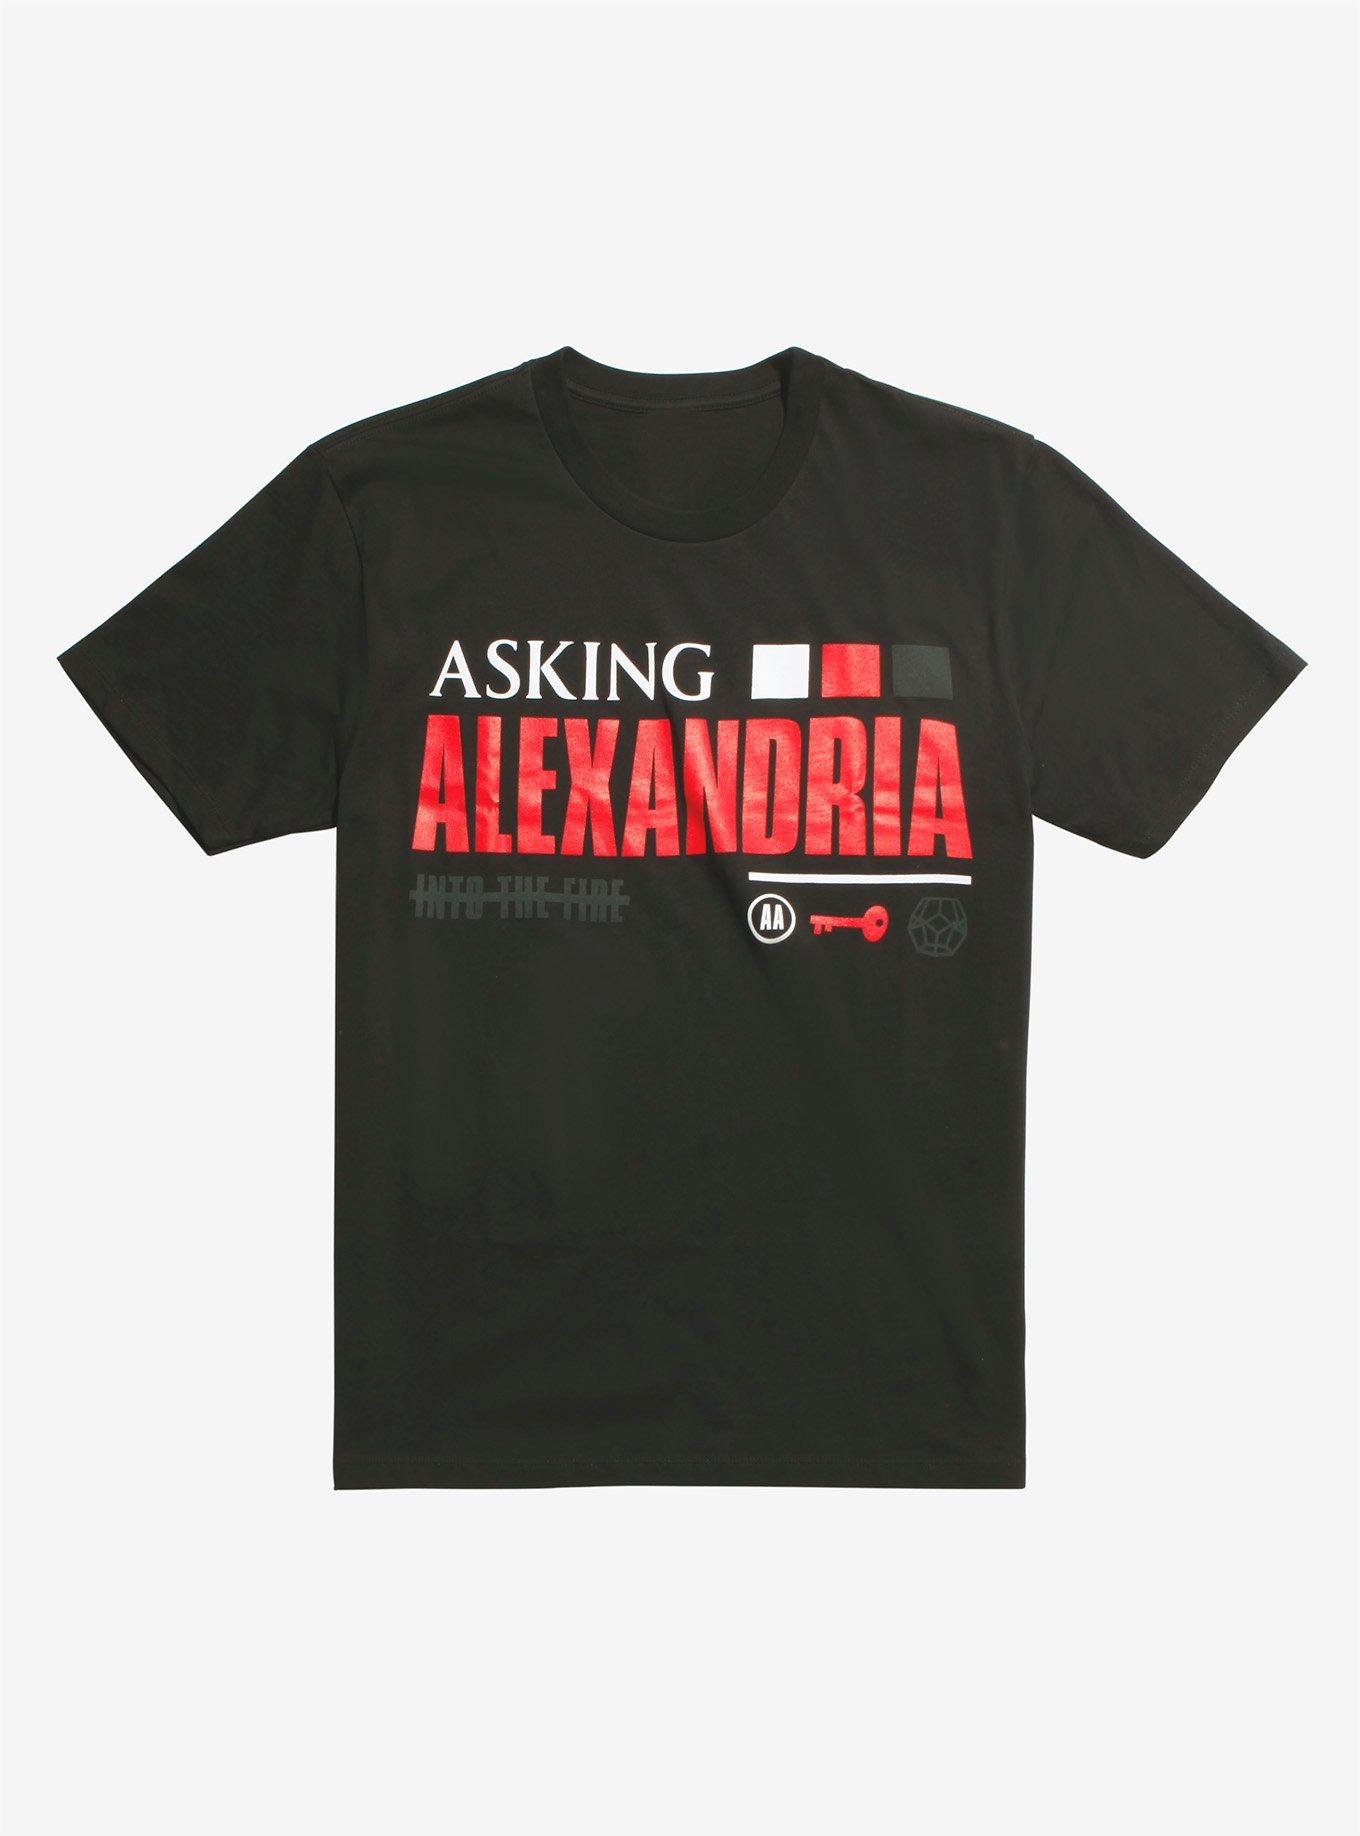 Asking Alexandria Into The Fire T-Shirt, BLACK, hi-res